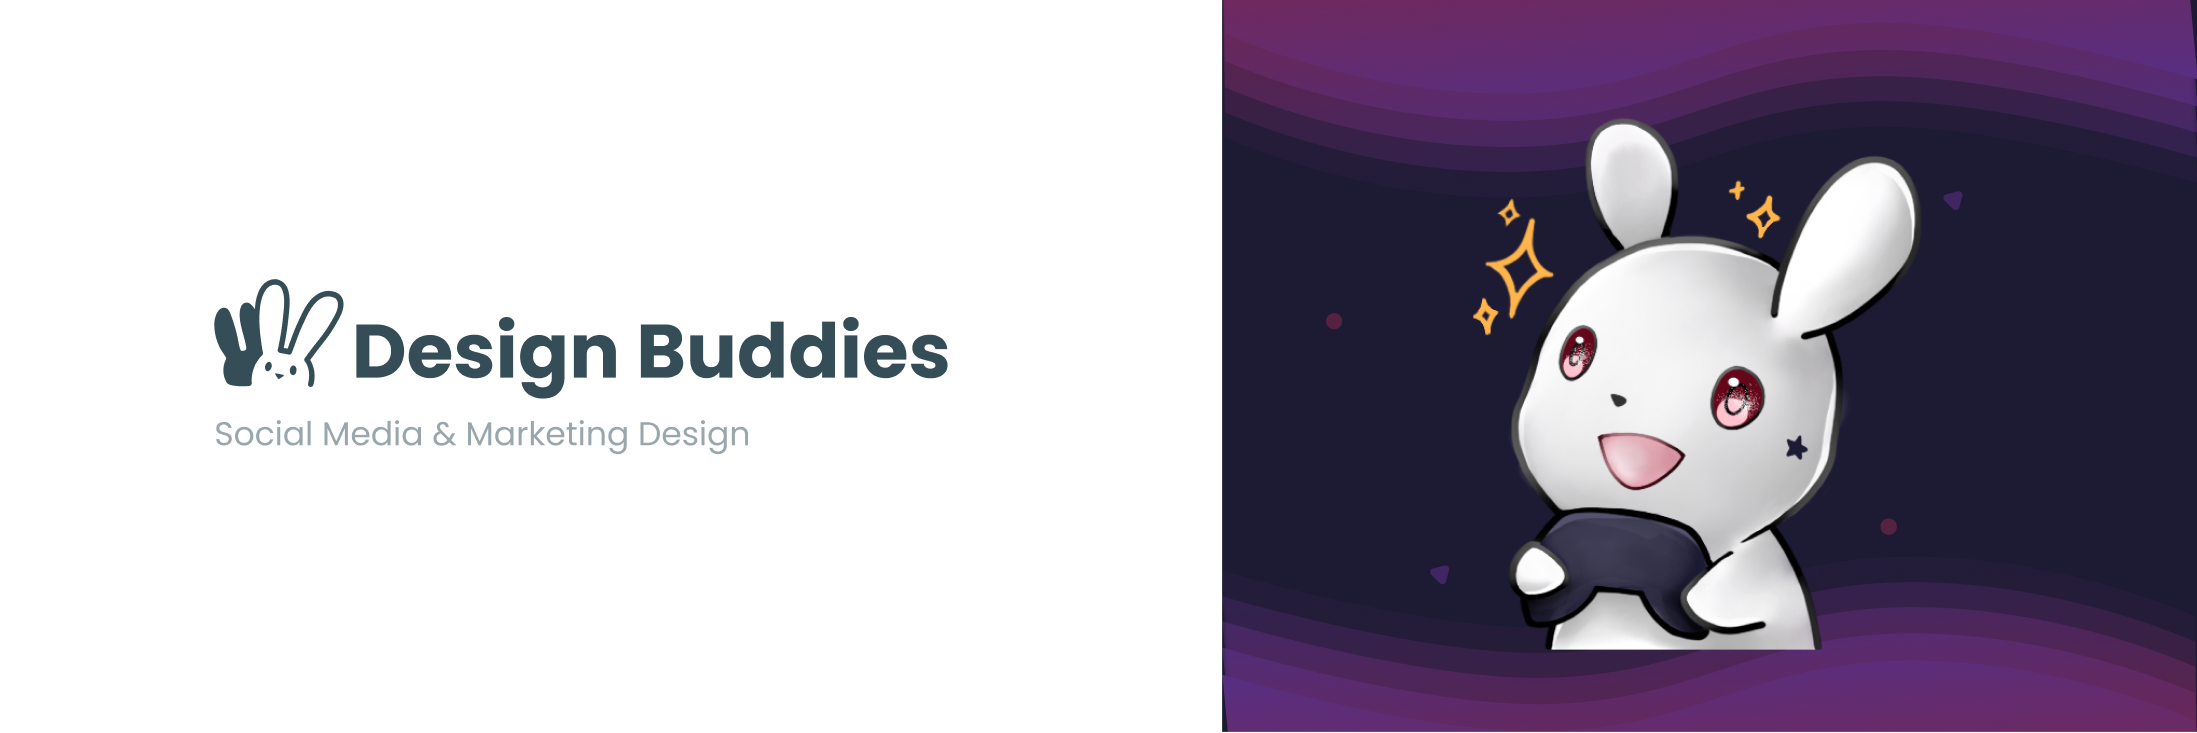 Design Buddies Game Jam Banner